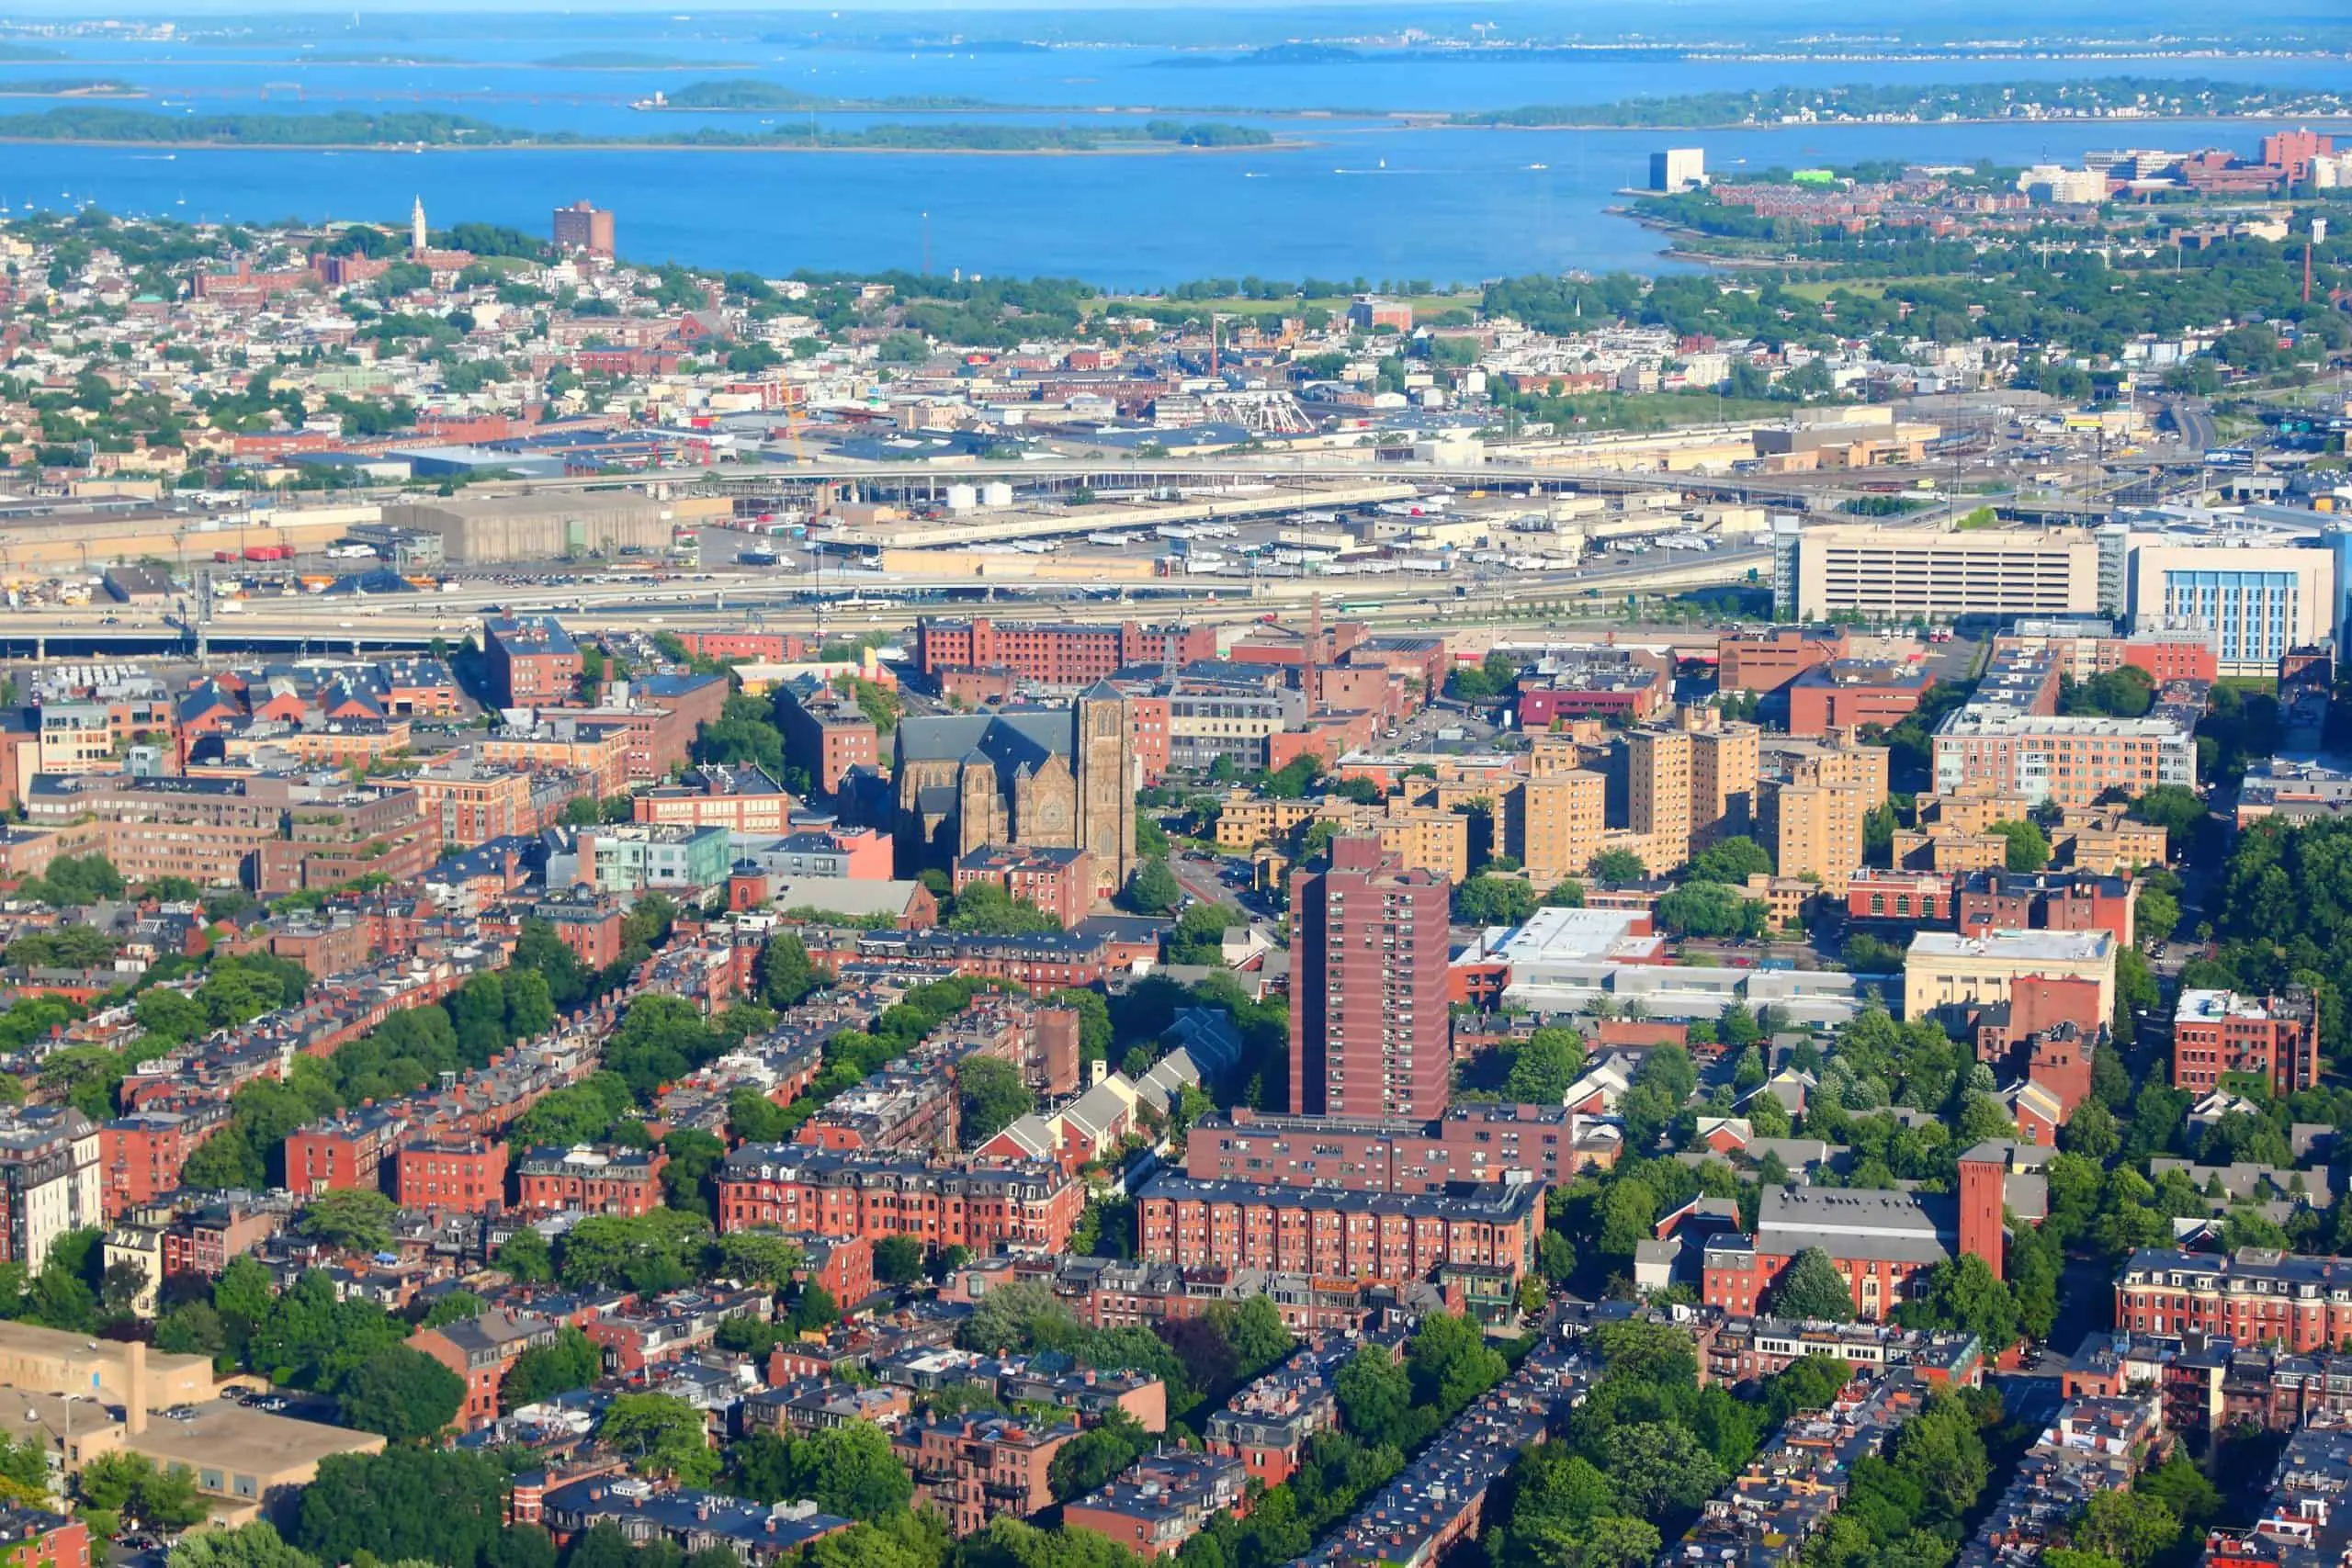 SoWa district (South of Washington) in city of Boston, Massachusetts.